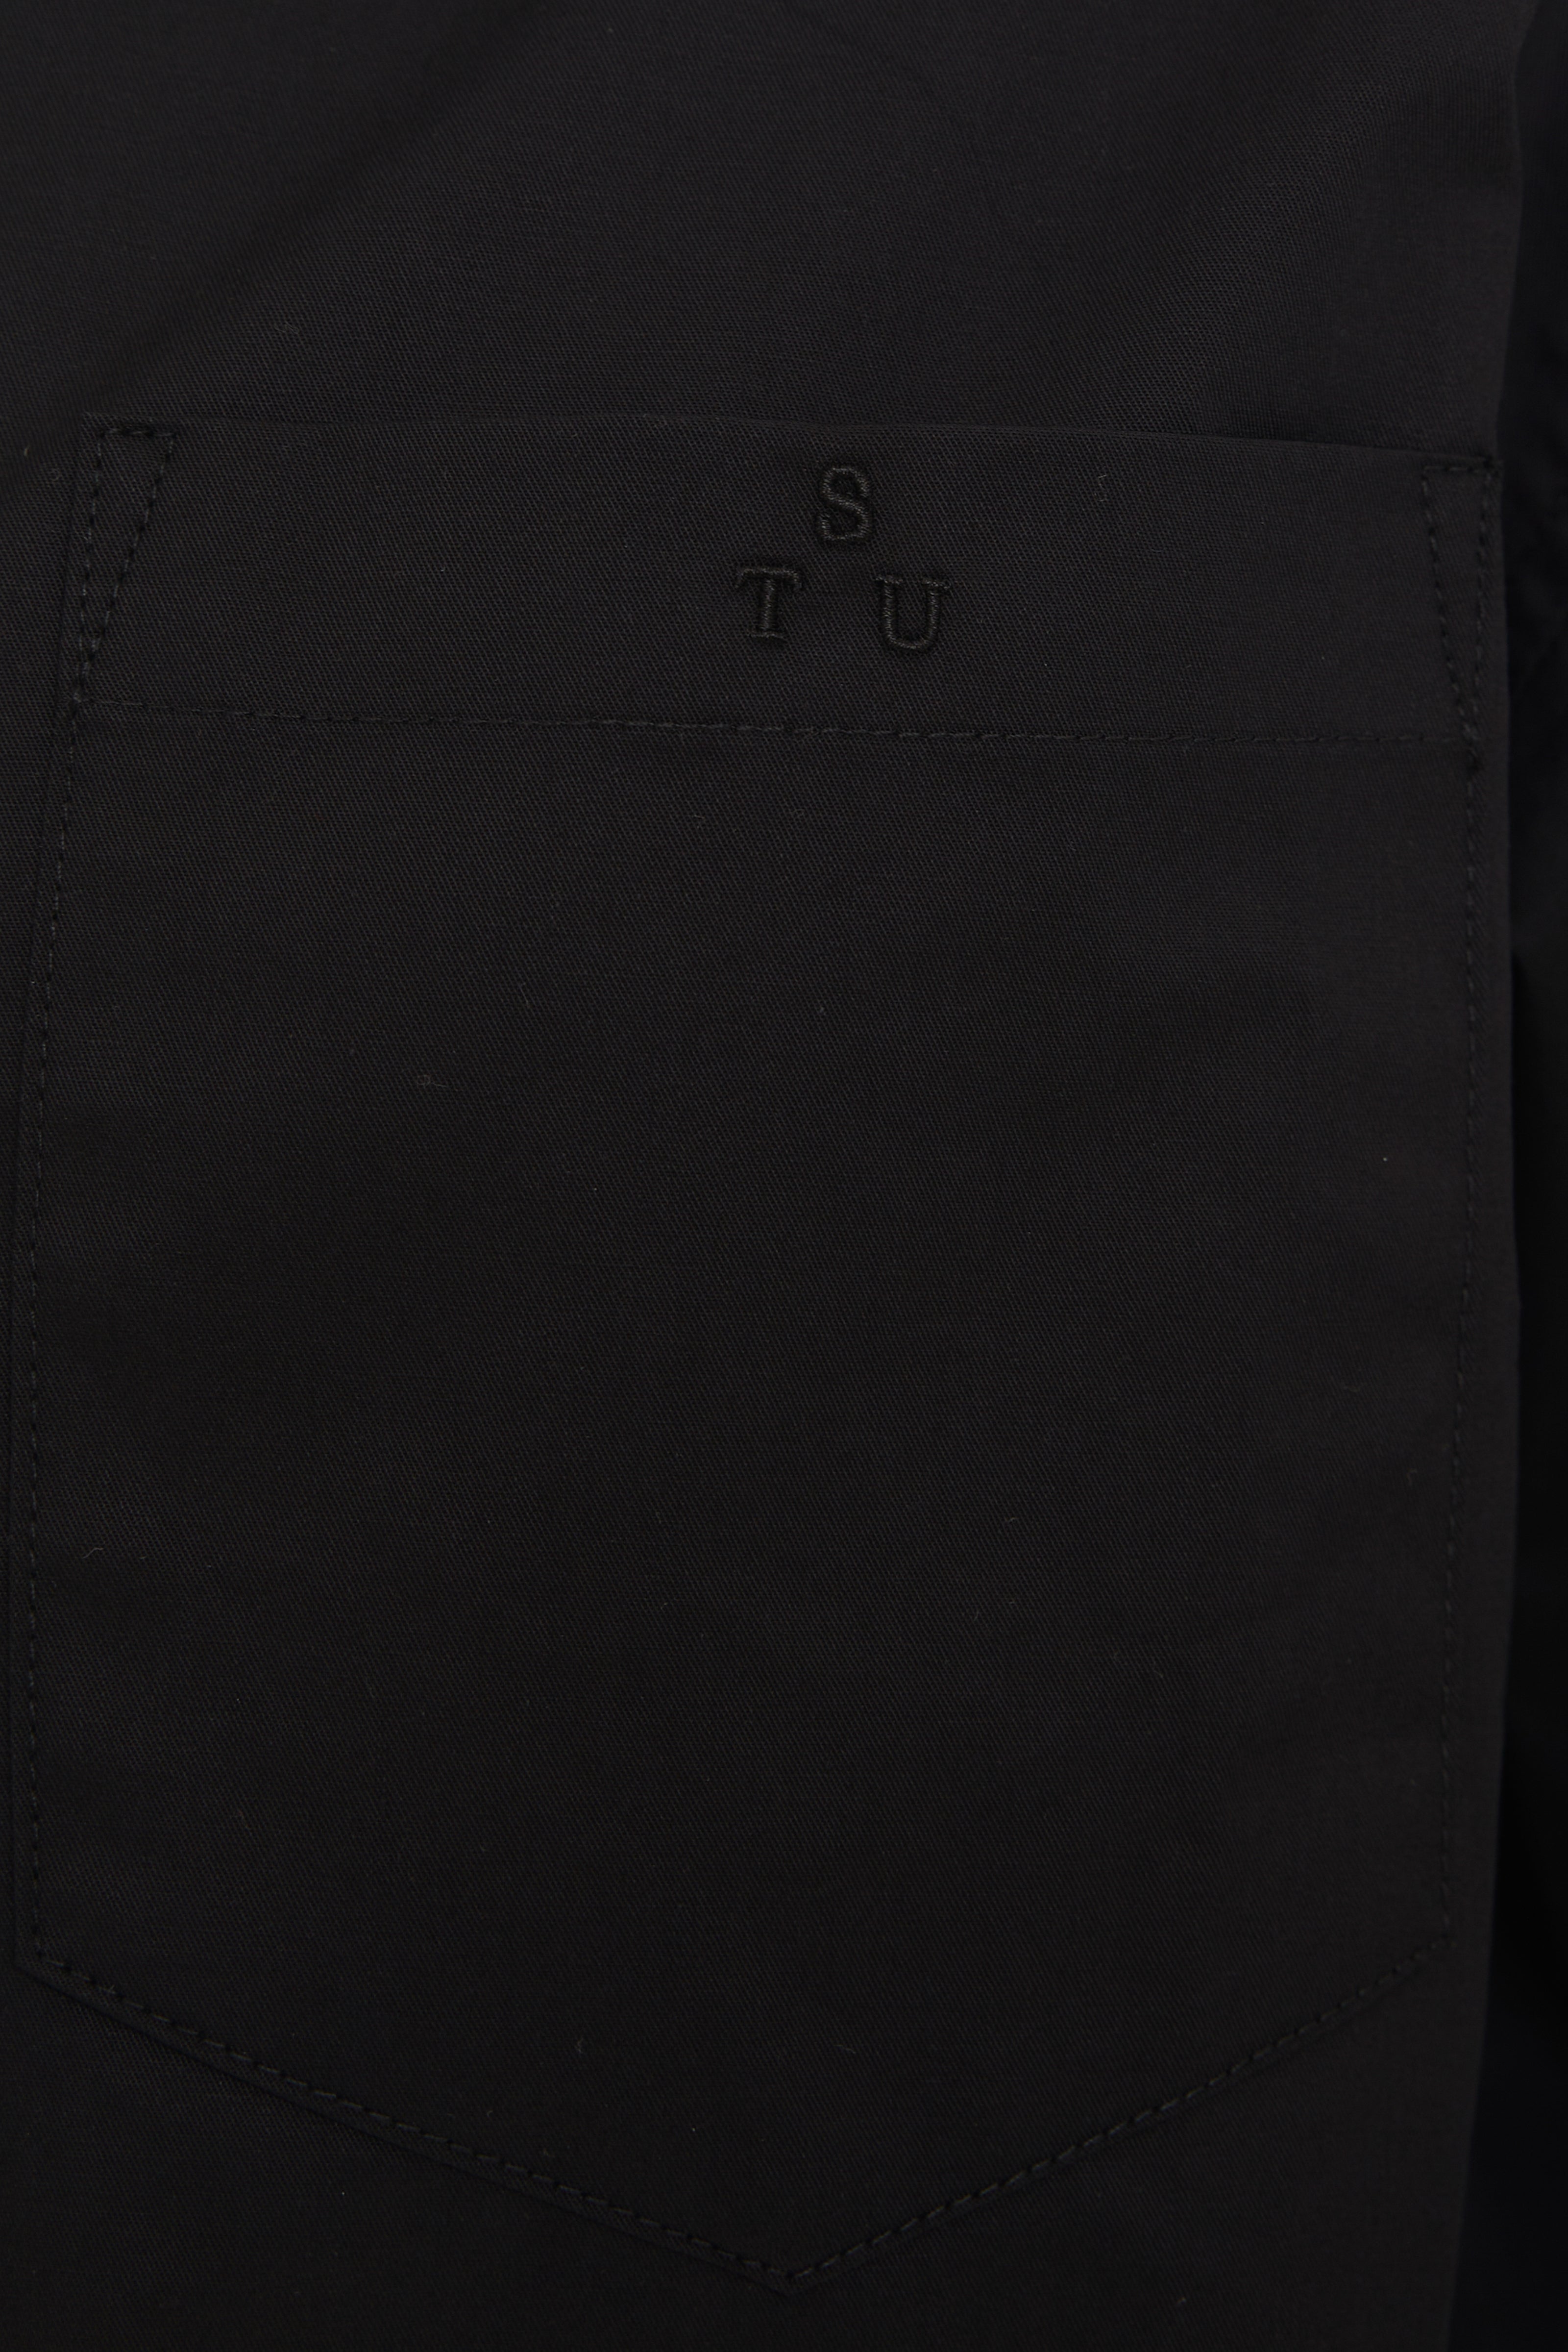 STUDIOS Pocket Shirt in Black